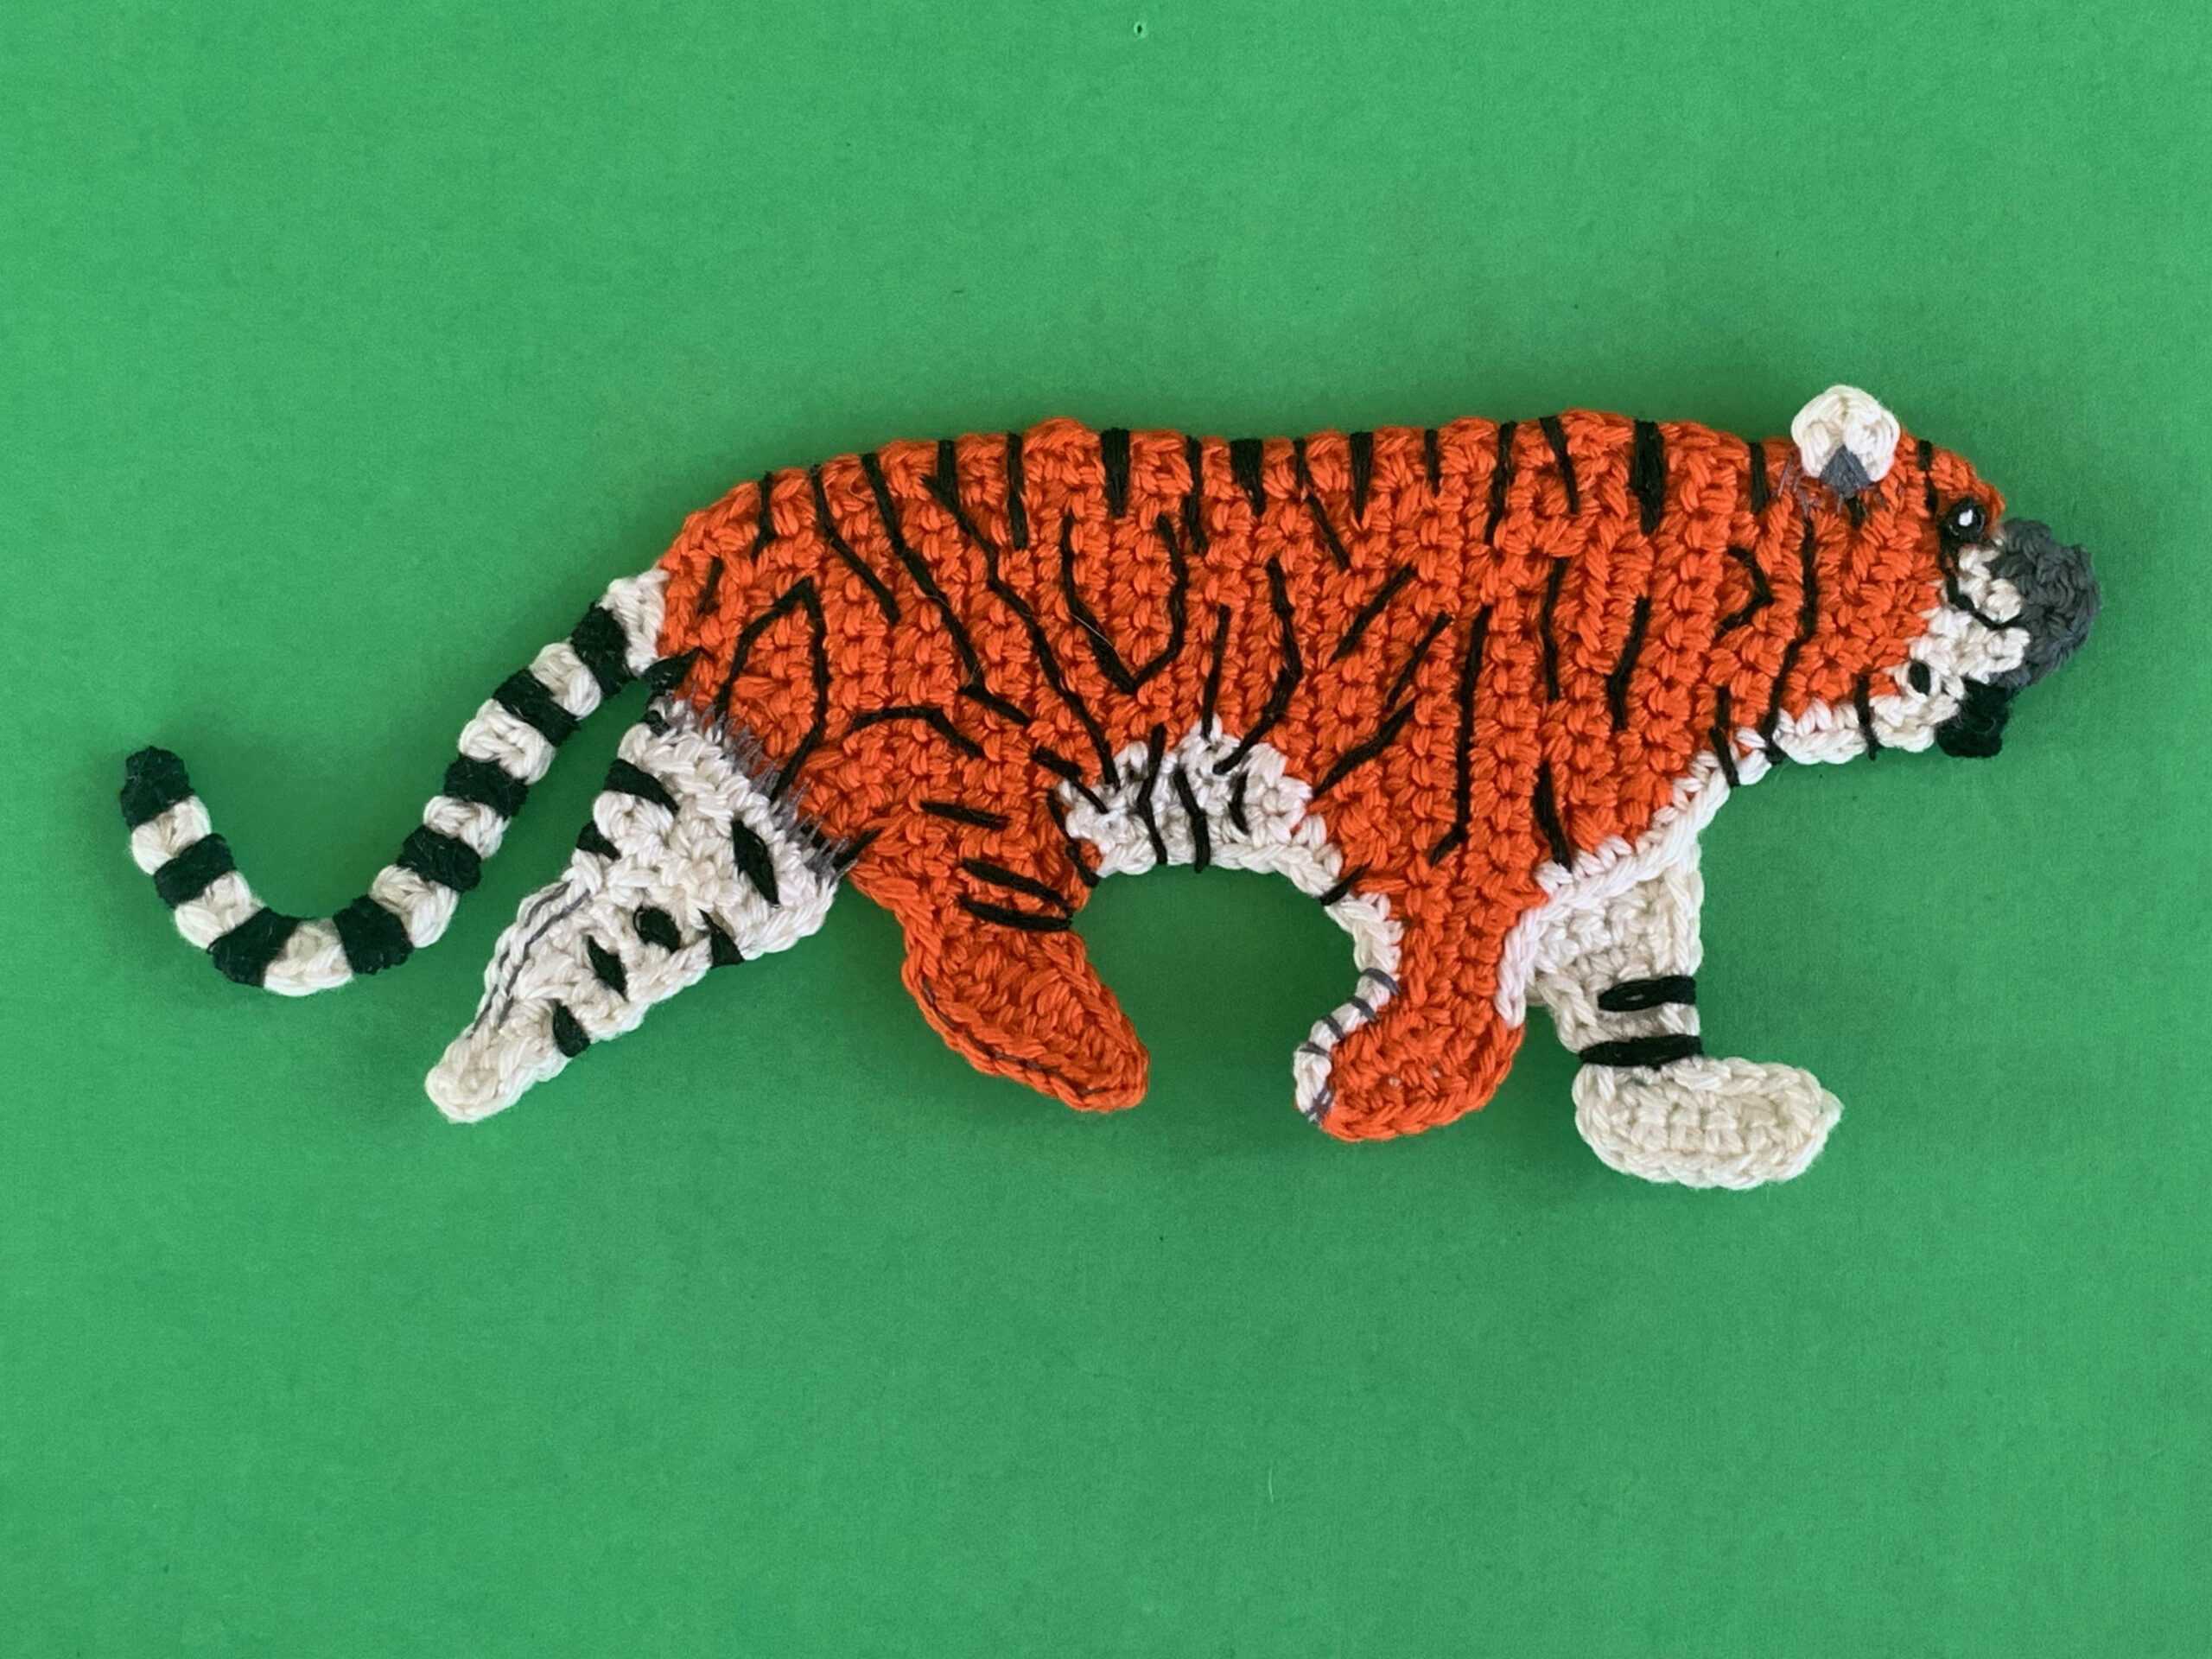 Finished crochet tiger 2 ply landscape